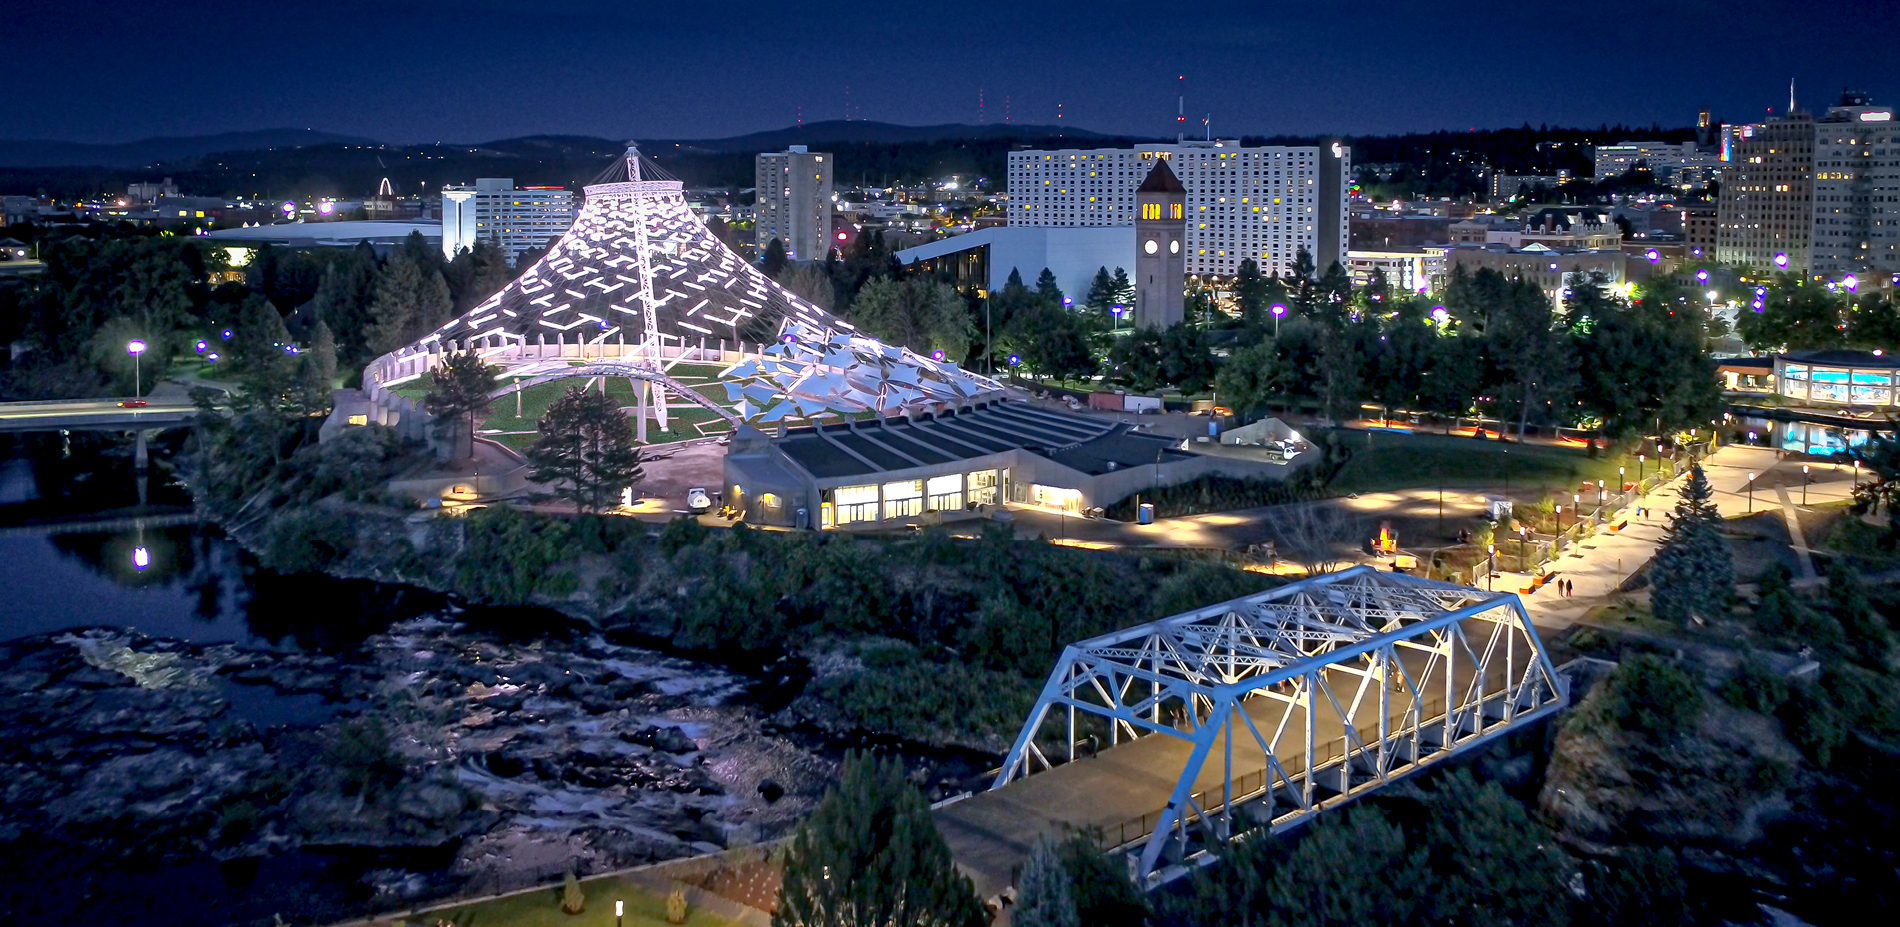 Riverfront Moves - The Core Four, Hype, Strike, Sculpt - City of Spokane,  Washington